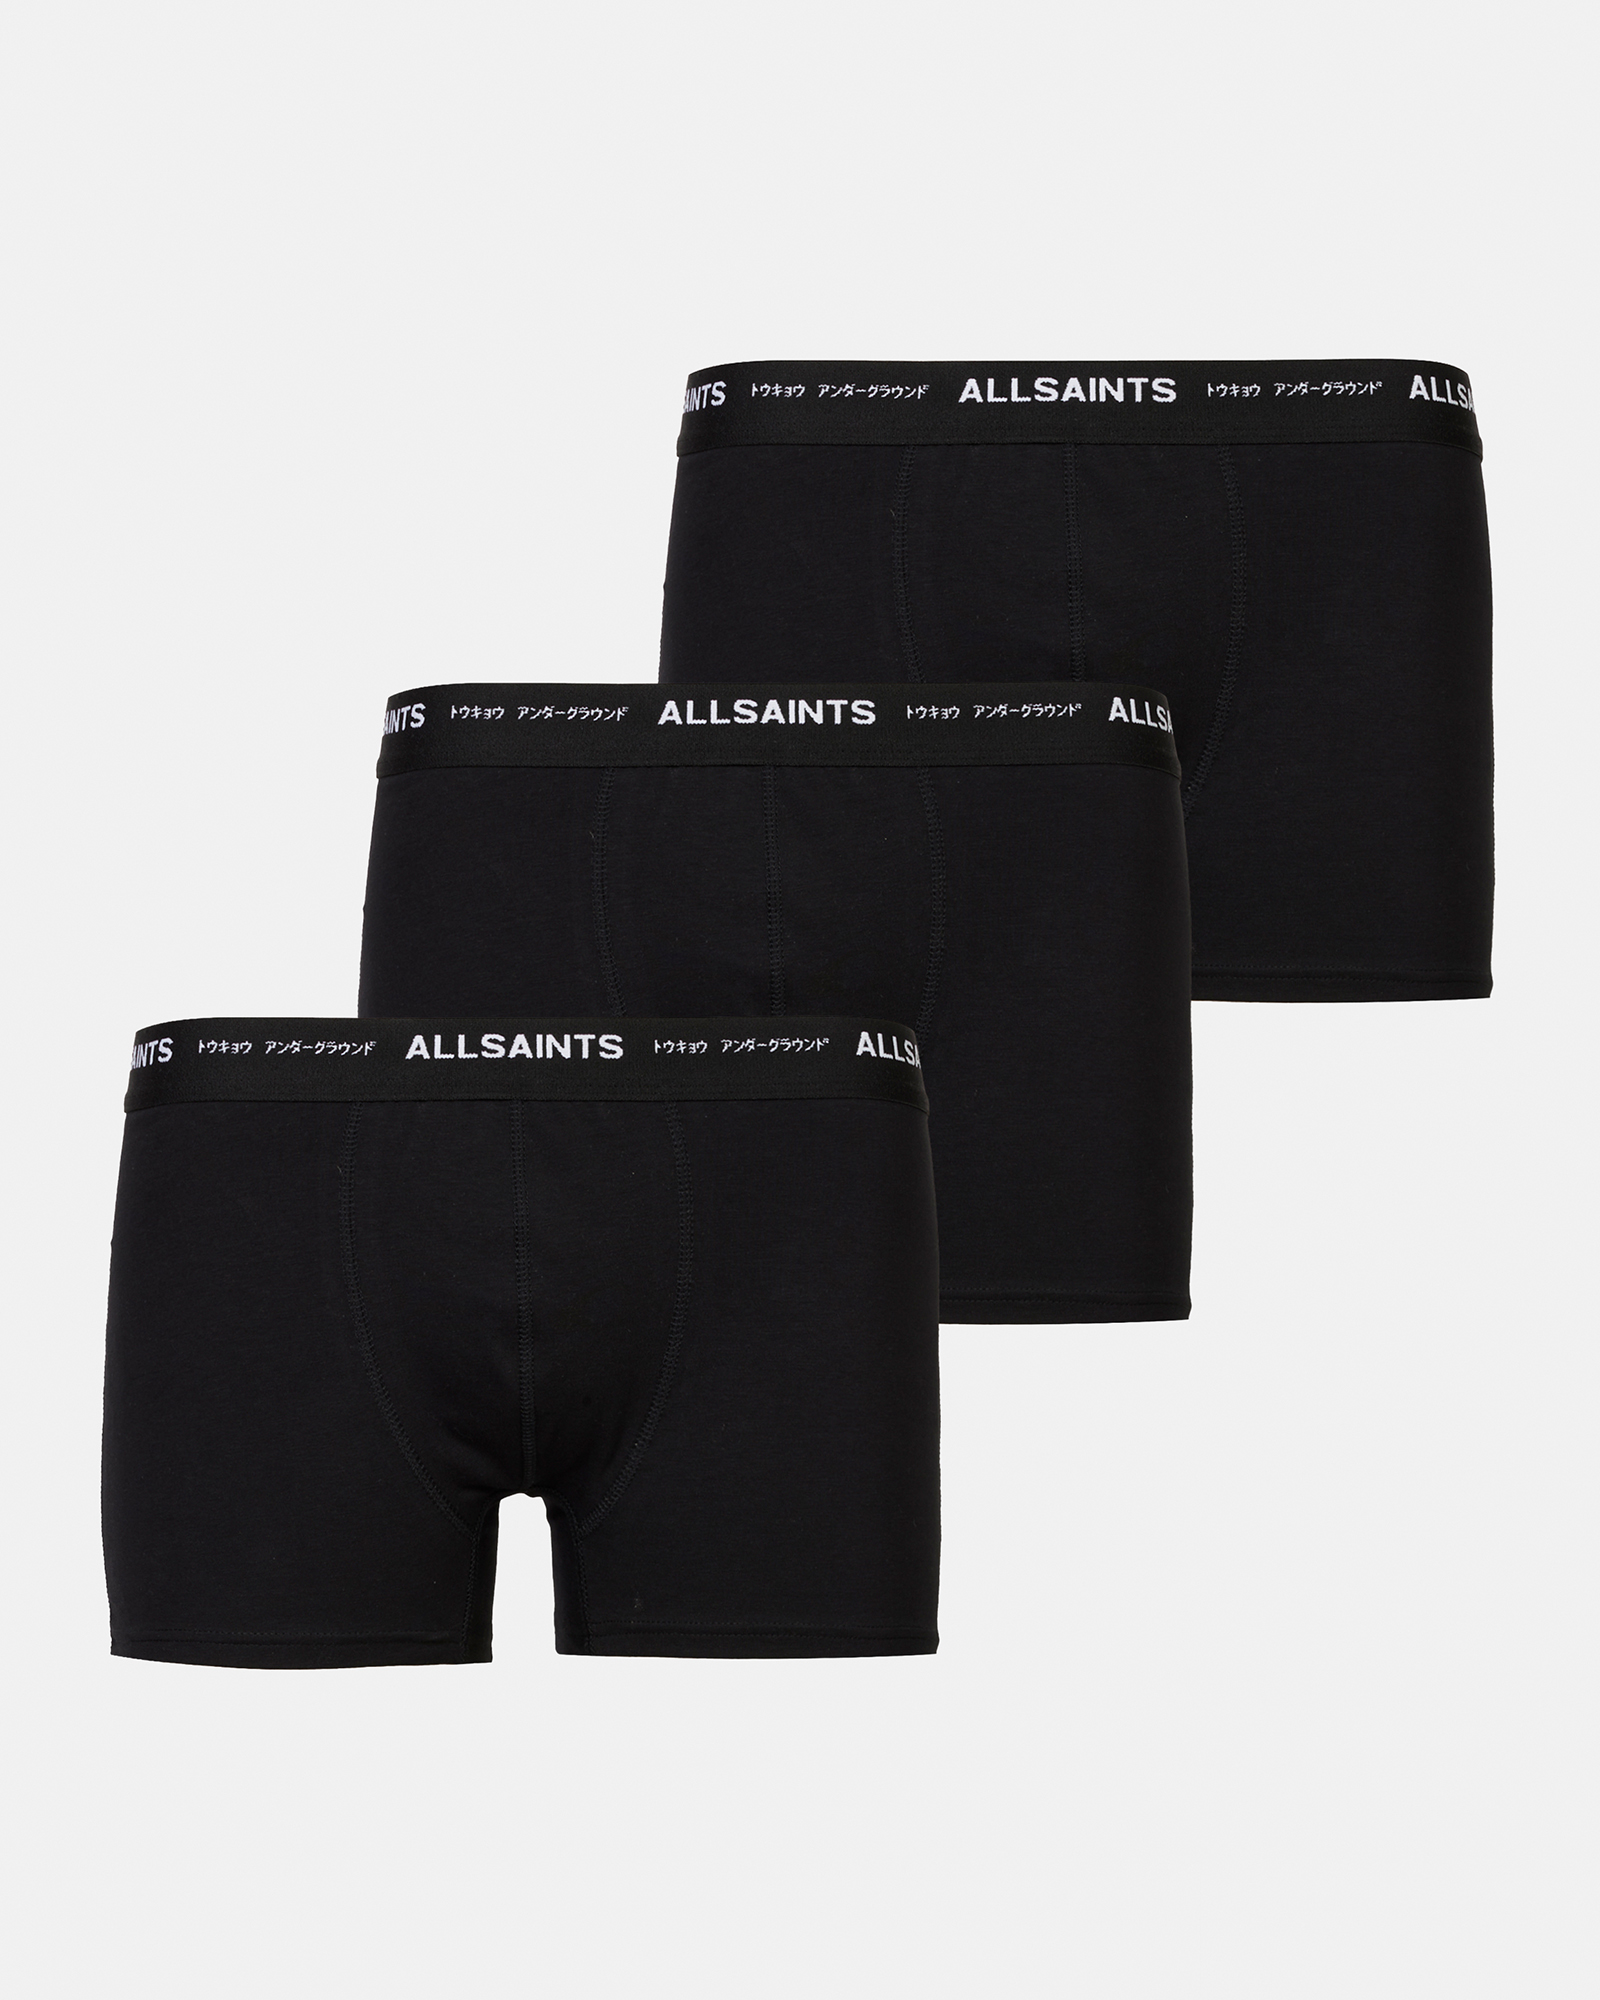 Allsaints Underground Logo Boxers 3 Pack In Black/black/black